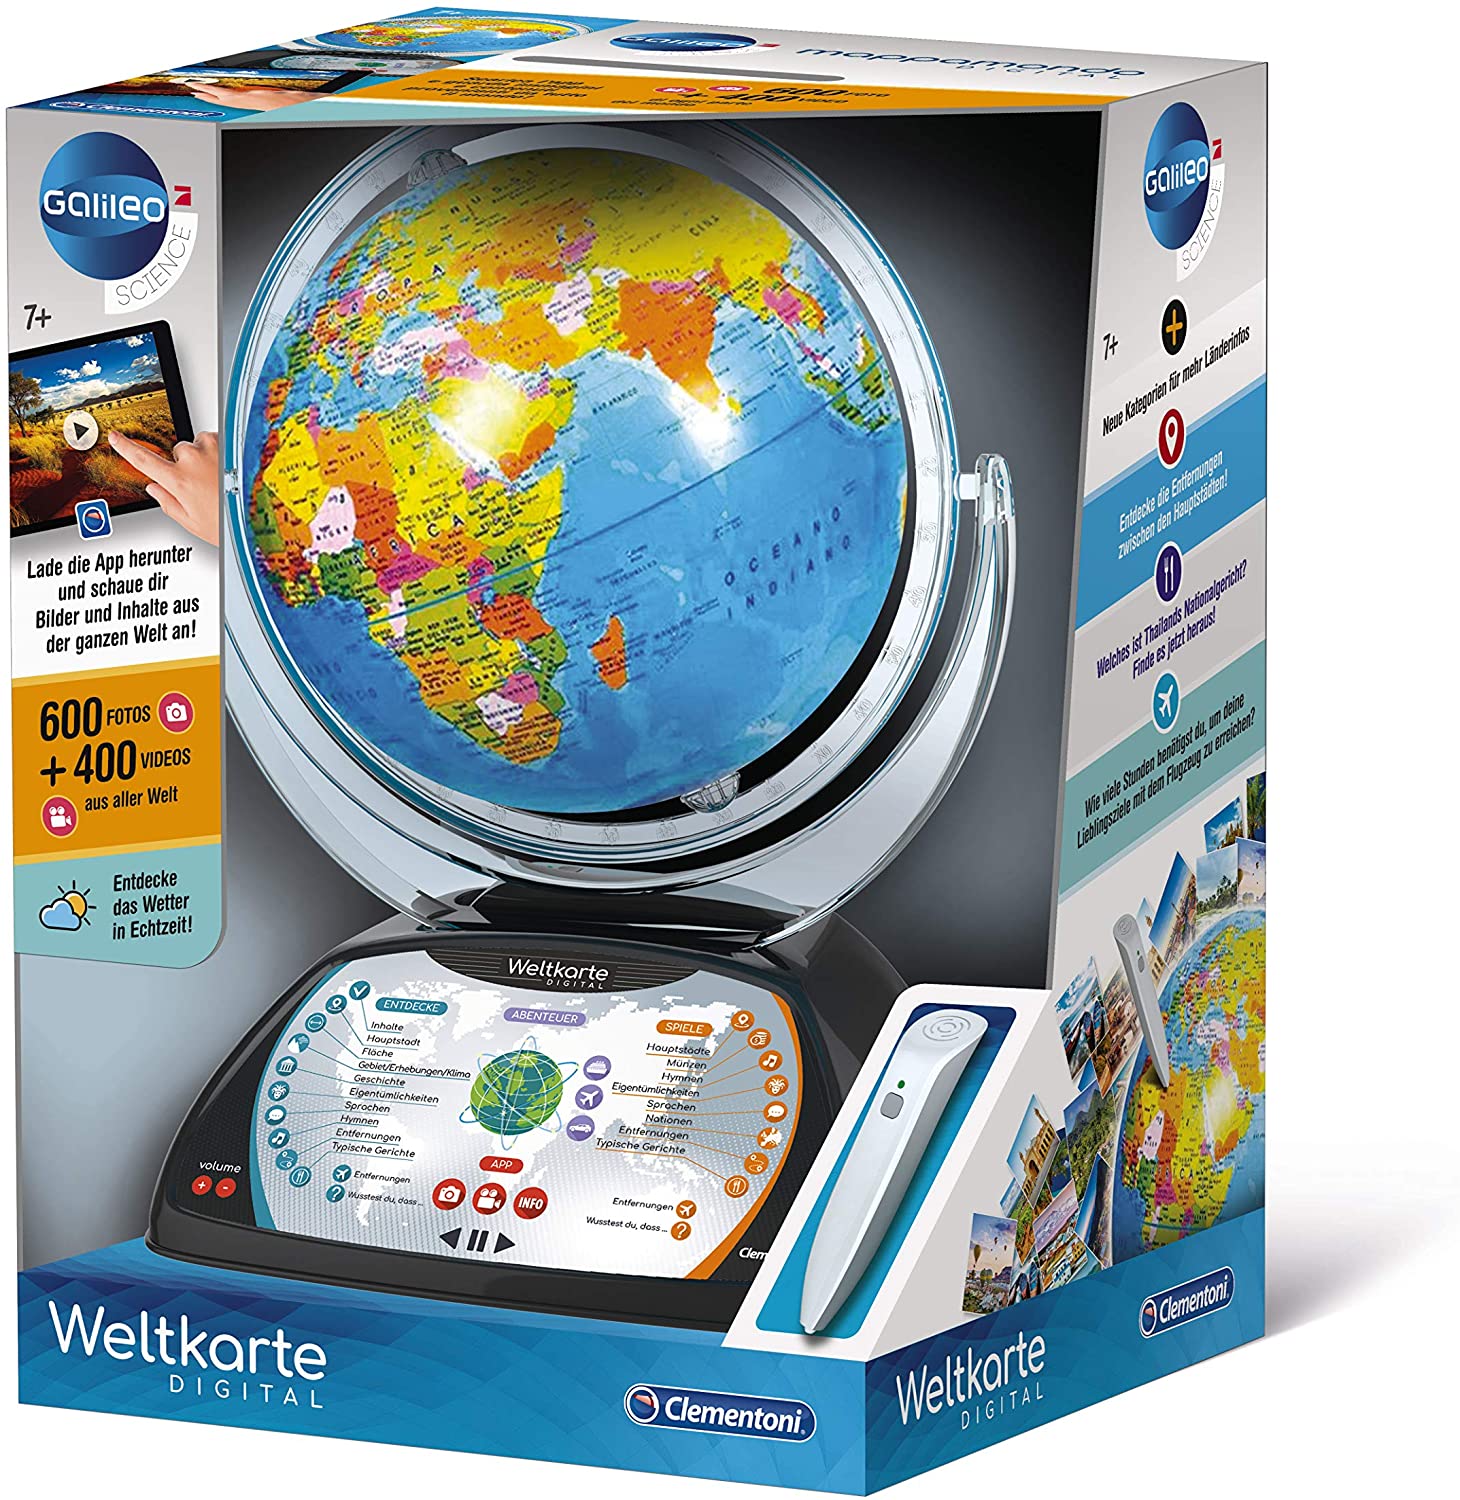 Clementoni 59184 Galileo Science Digital Globe With App, Talking Globe With